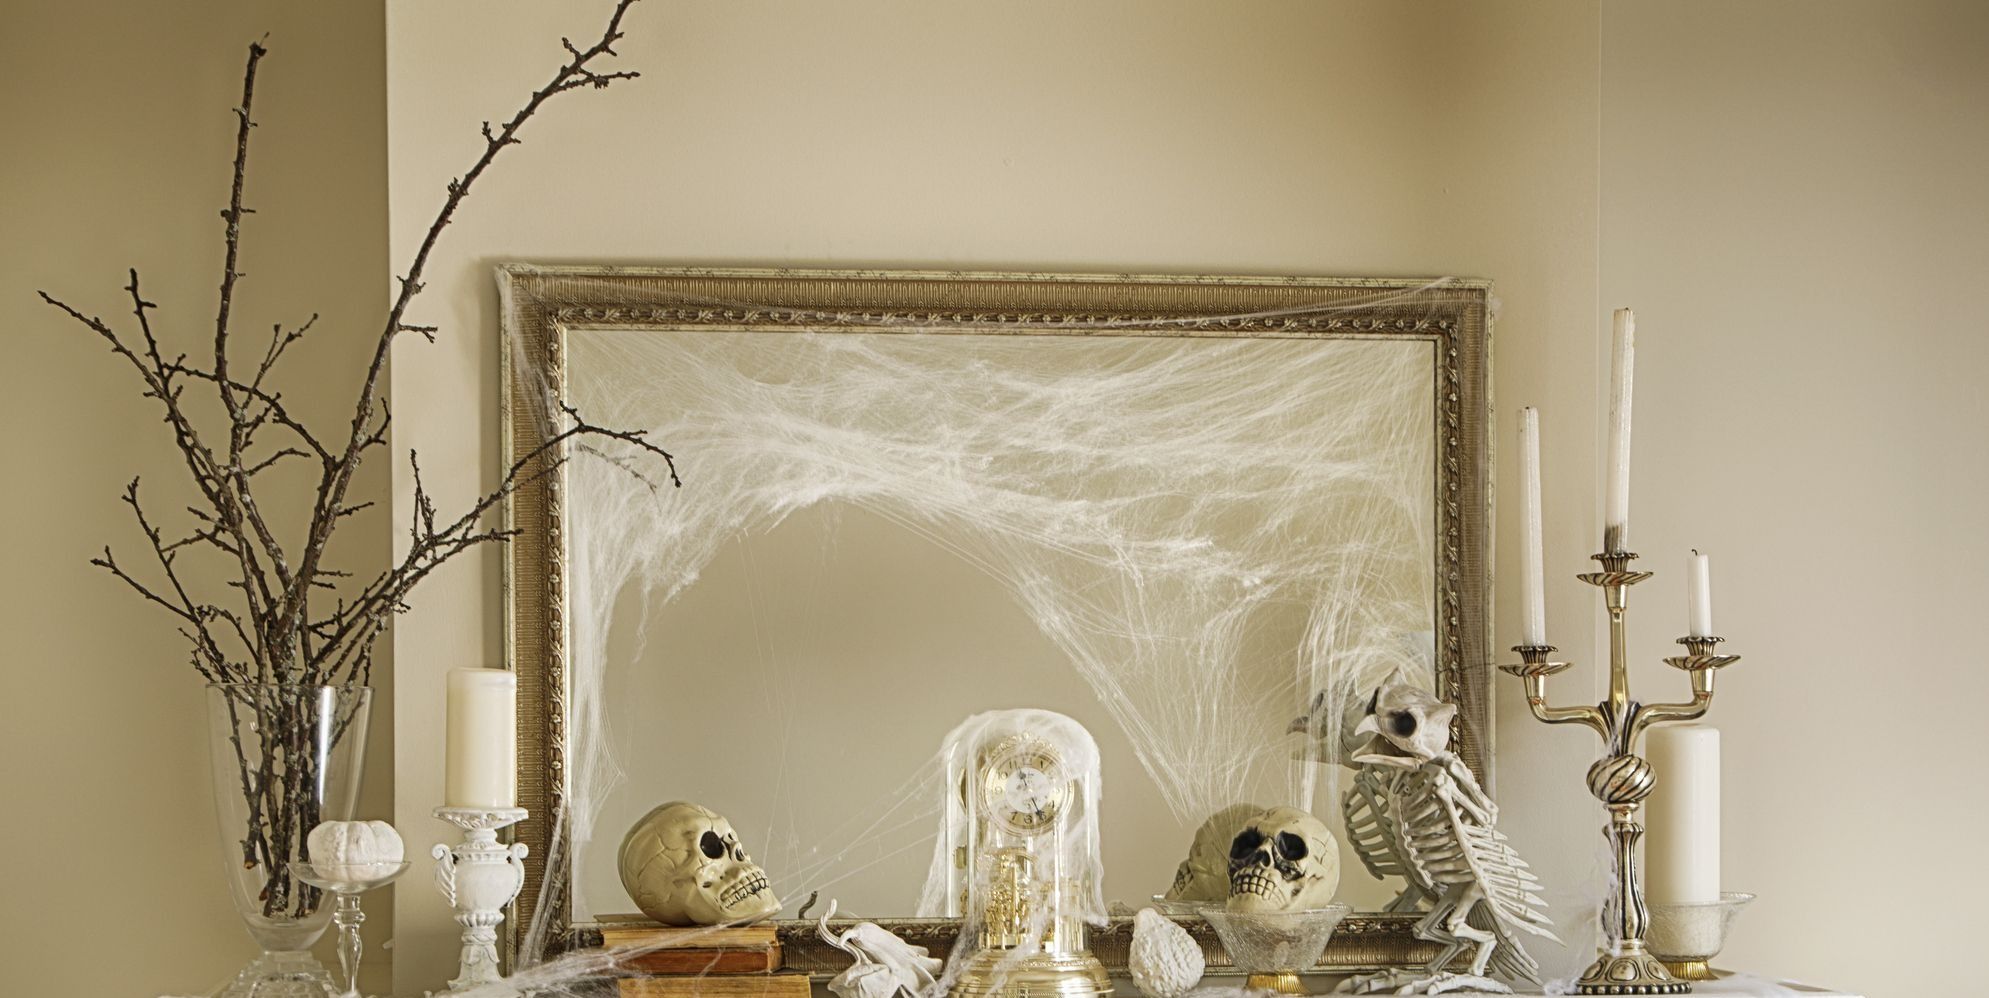 diy halloween skull decorations